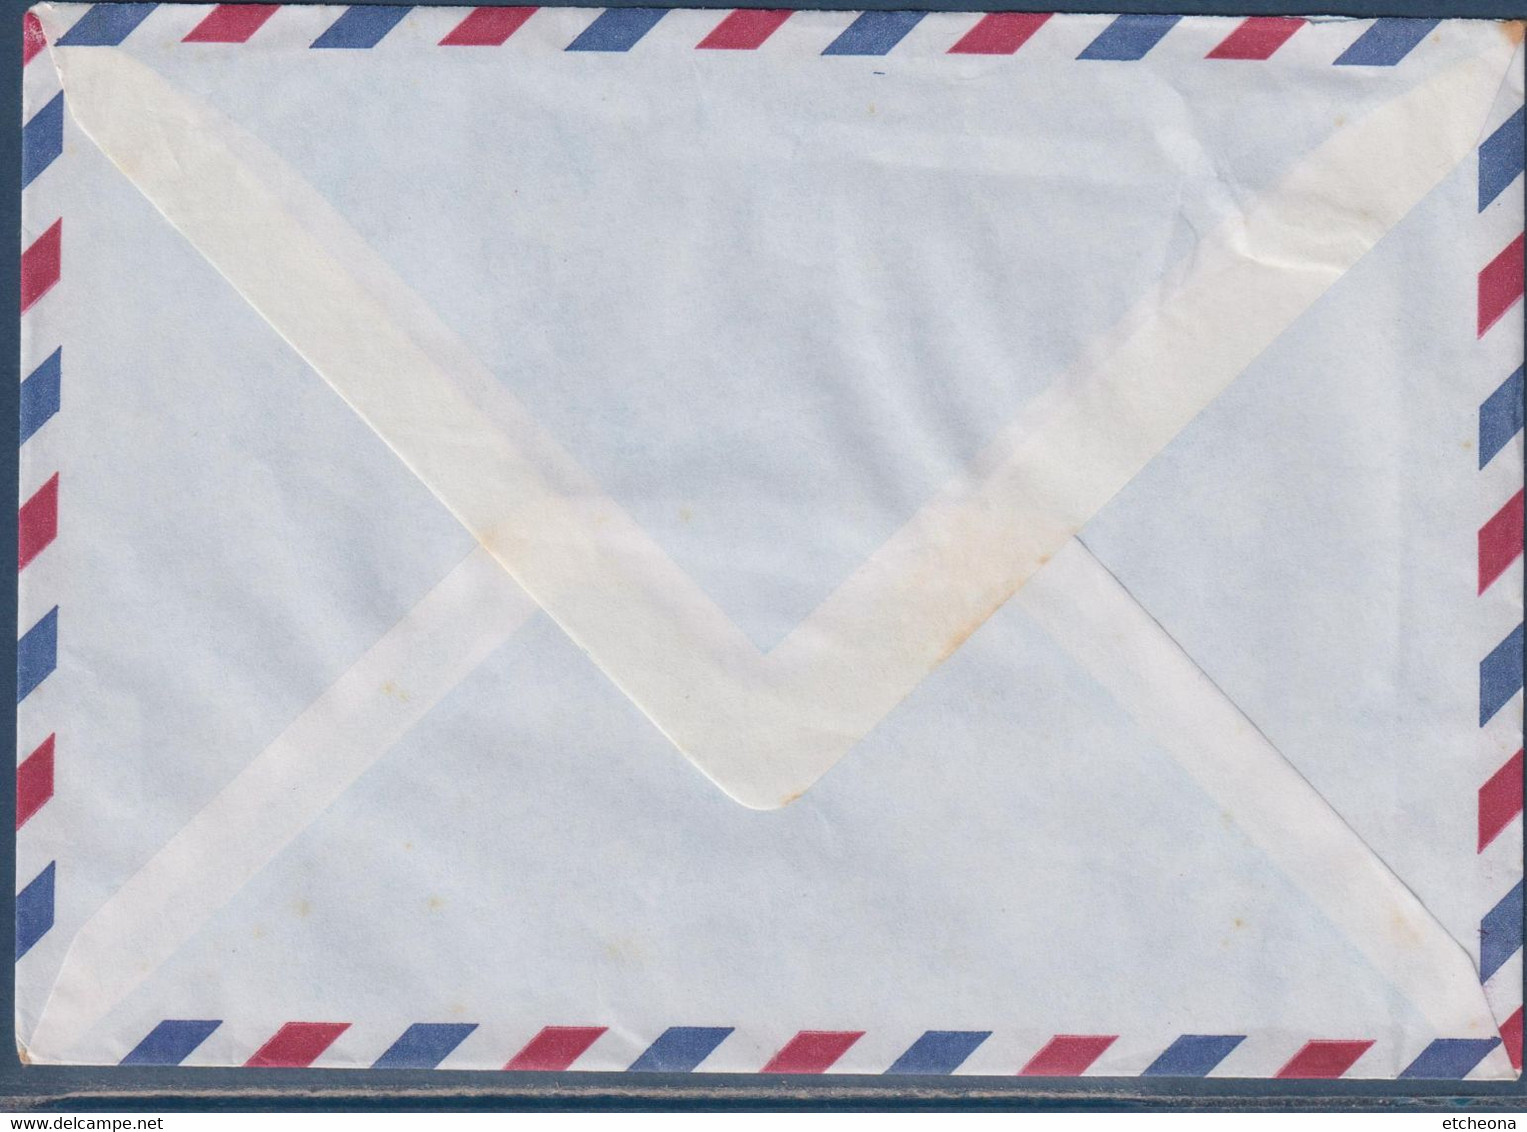 Enveloppe De Polynésie Punaauia Tamanu, Tahiti, 29.05.95 Avec Timbre N°462 - Storia Postale